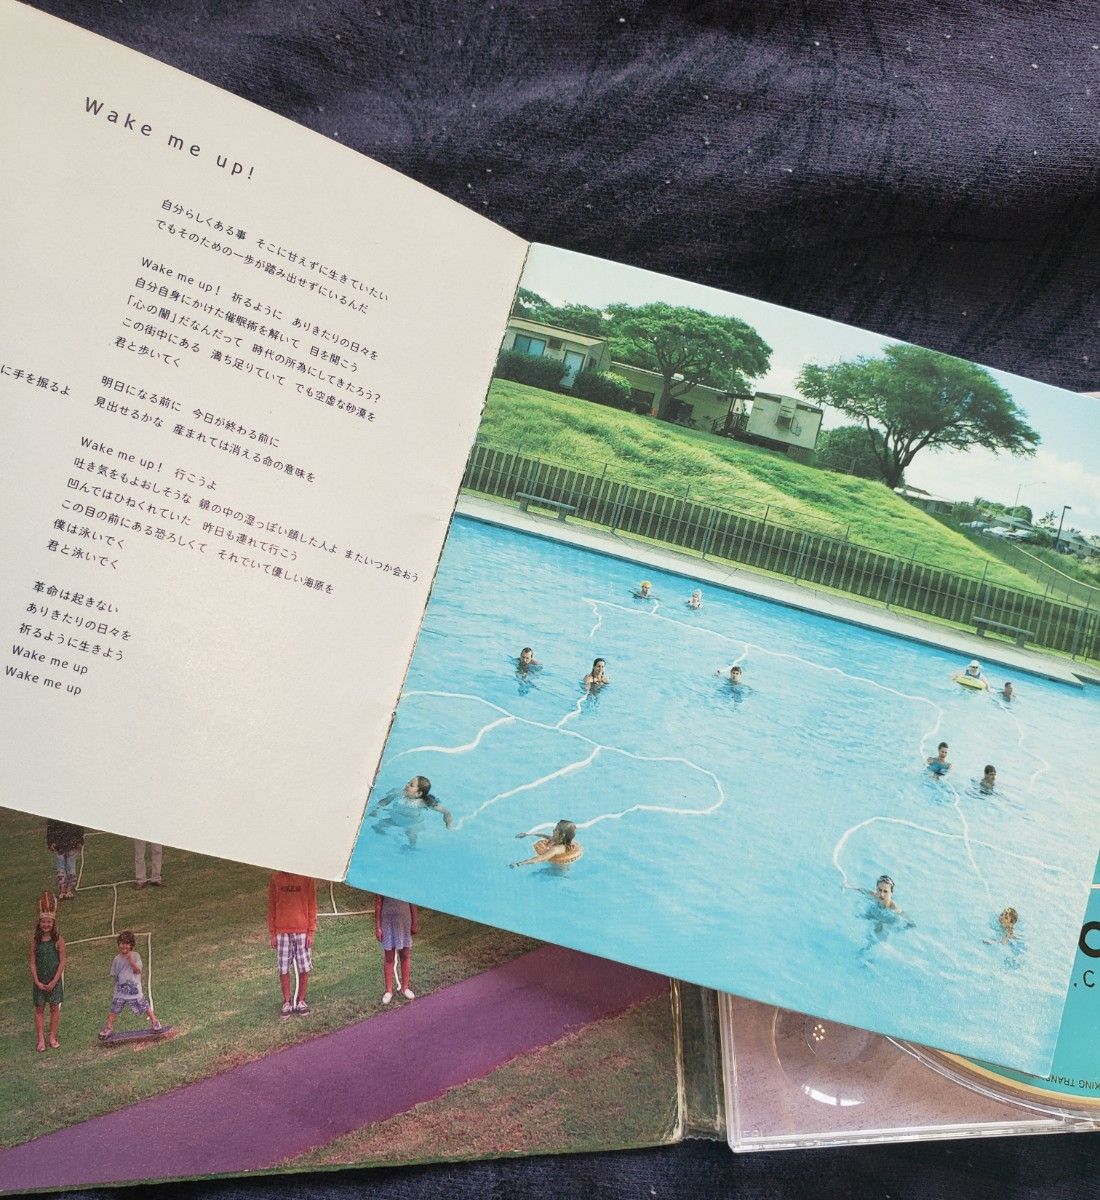 Mr.Children のCDアルバム『 SOUNDTRACKS 』& 『HOME』レンタル落ち